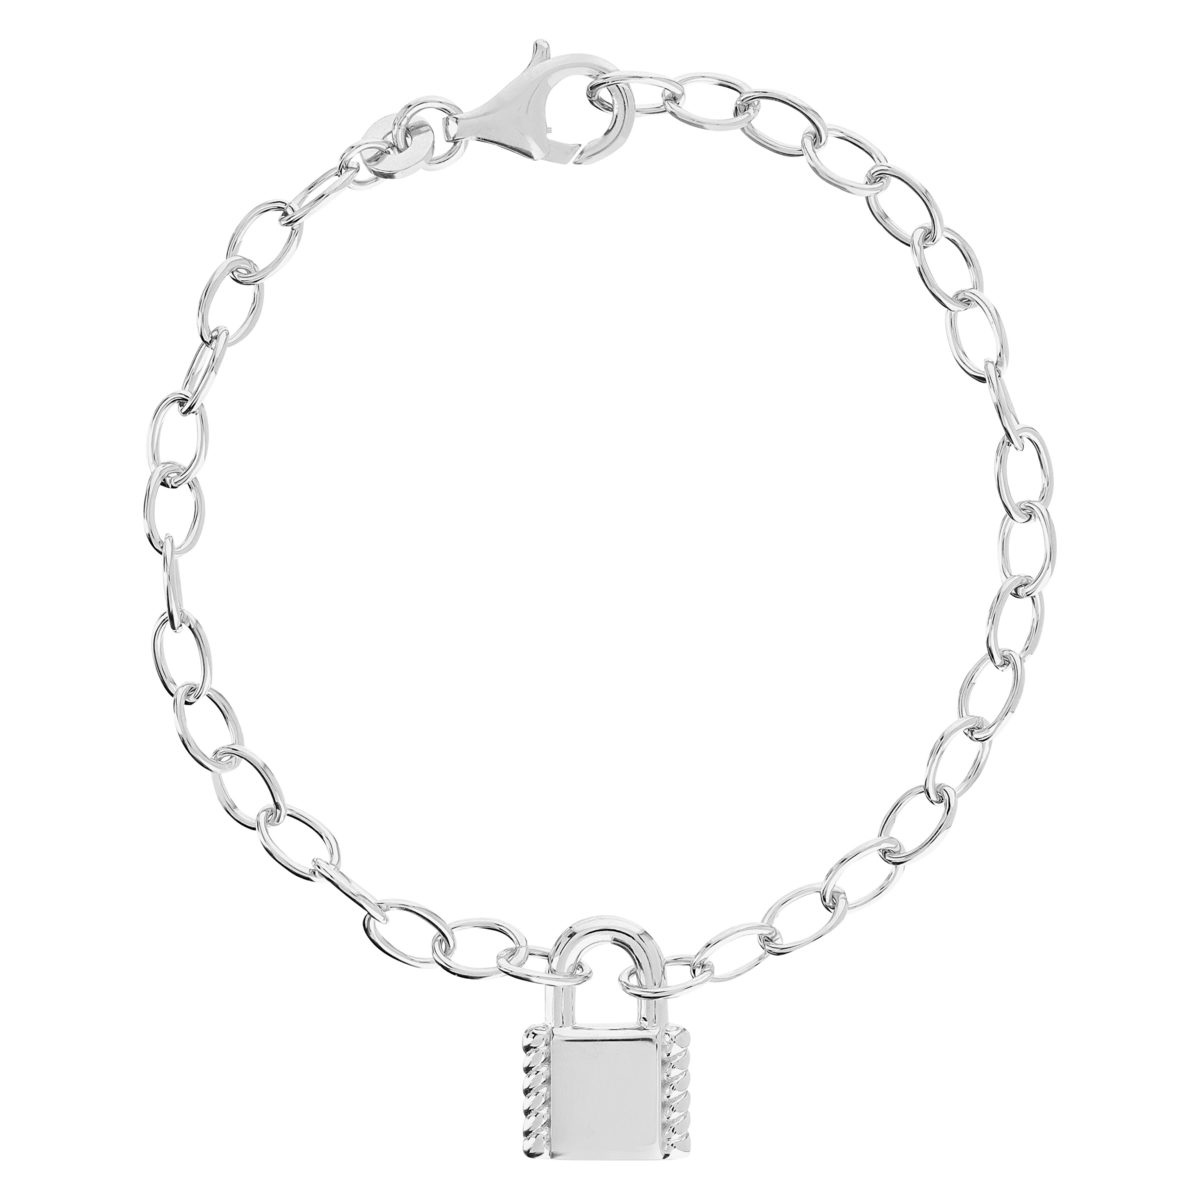 Bracelet argent 925 motif cadenas 18 cm